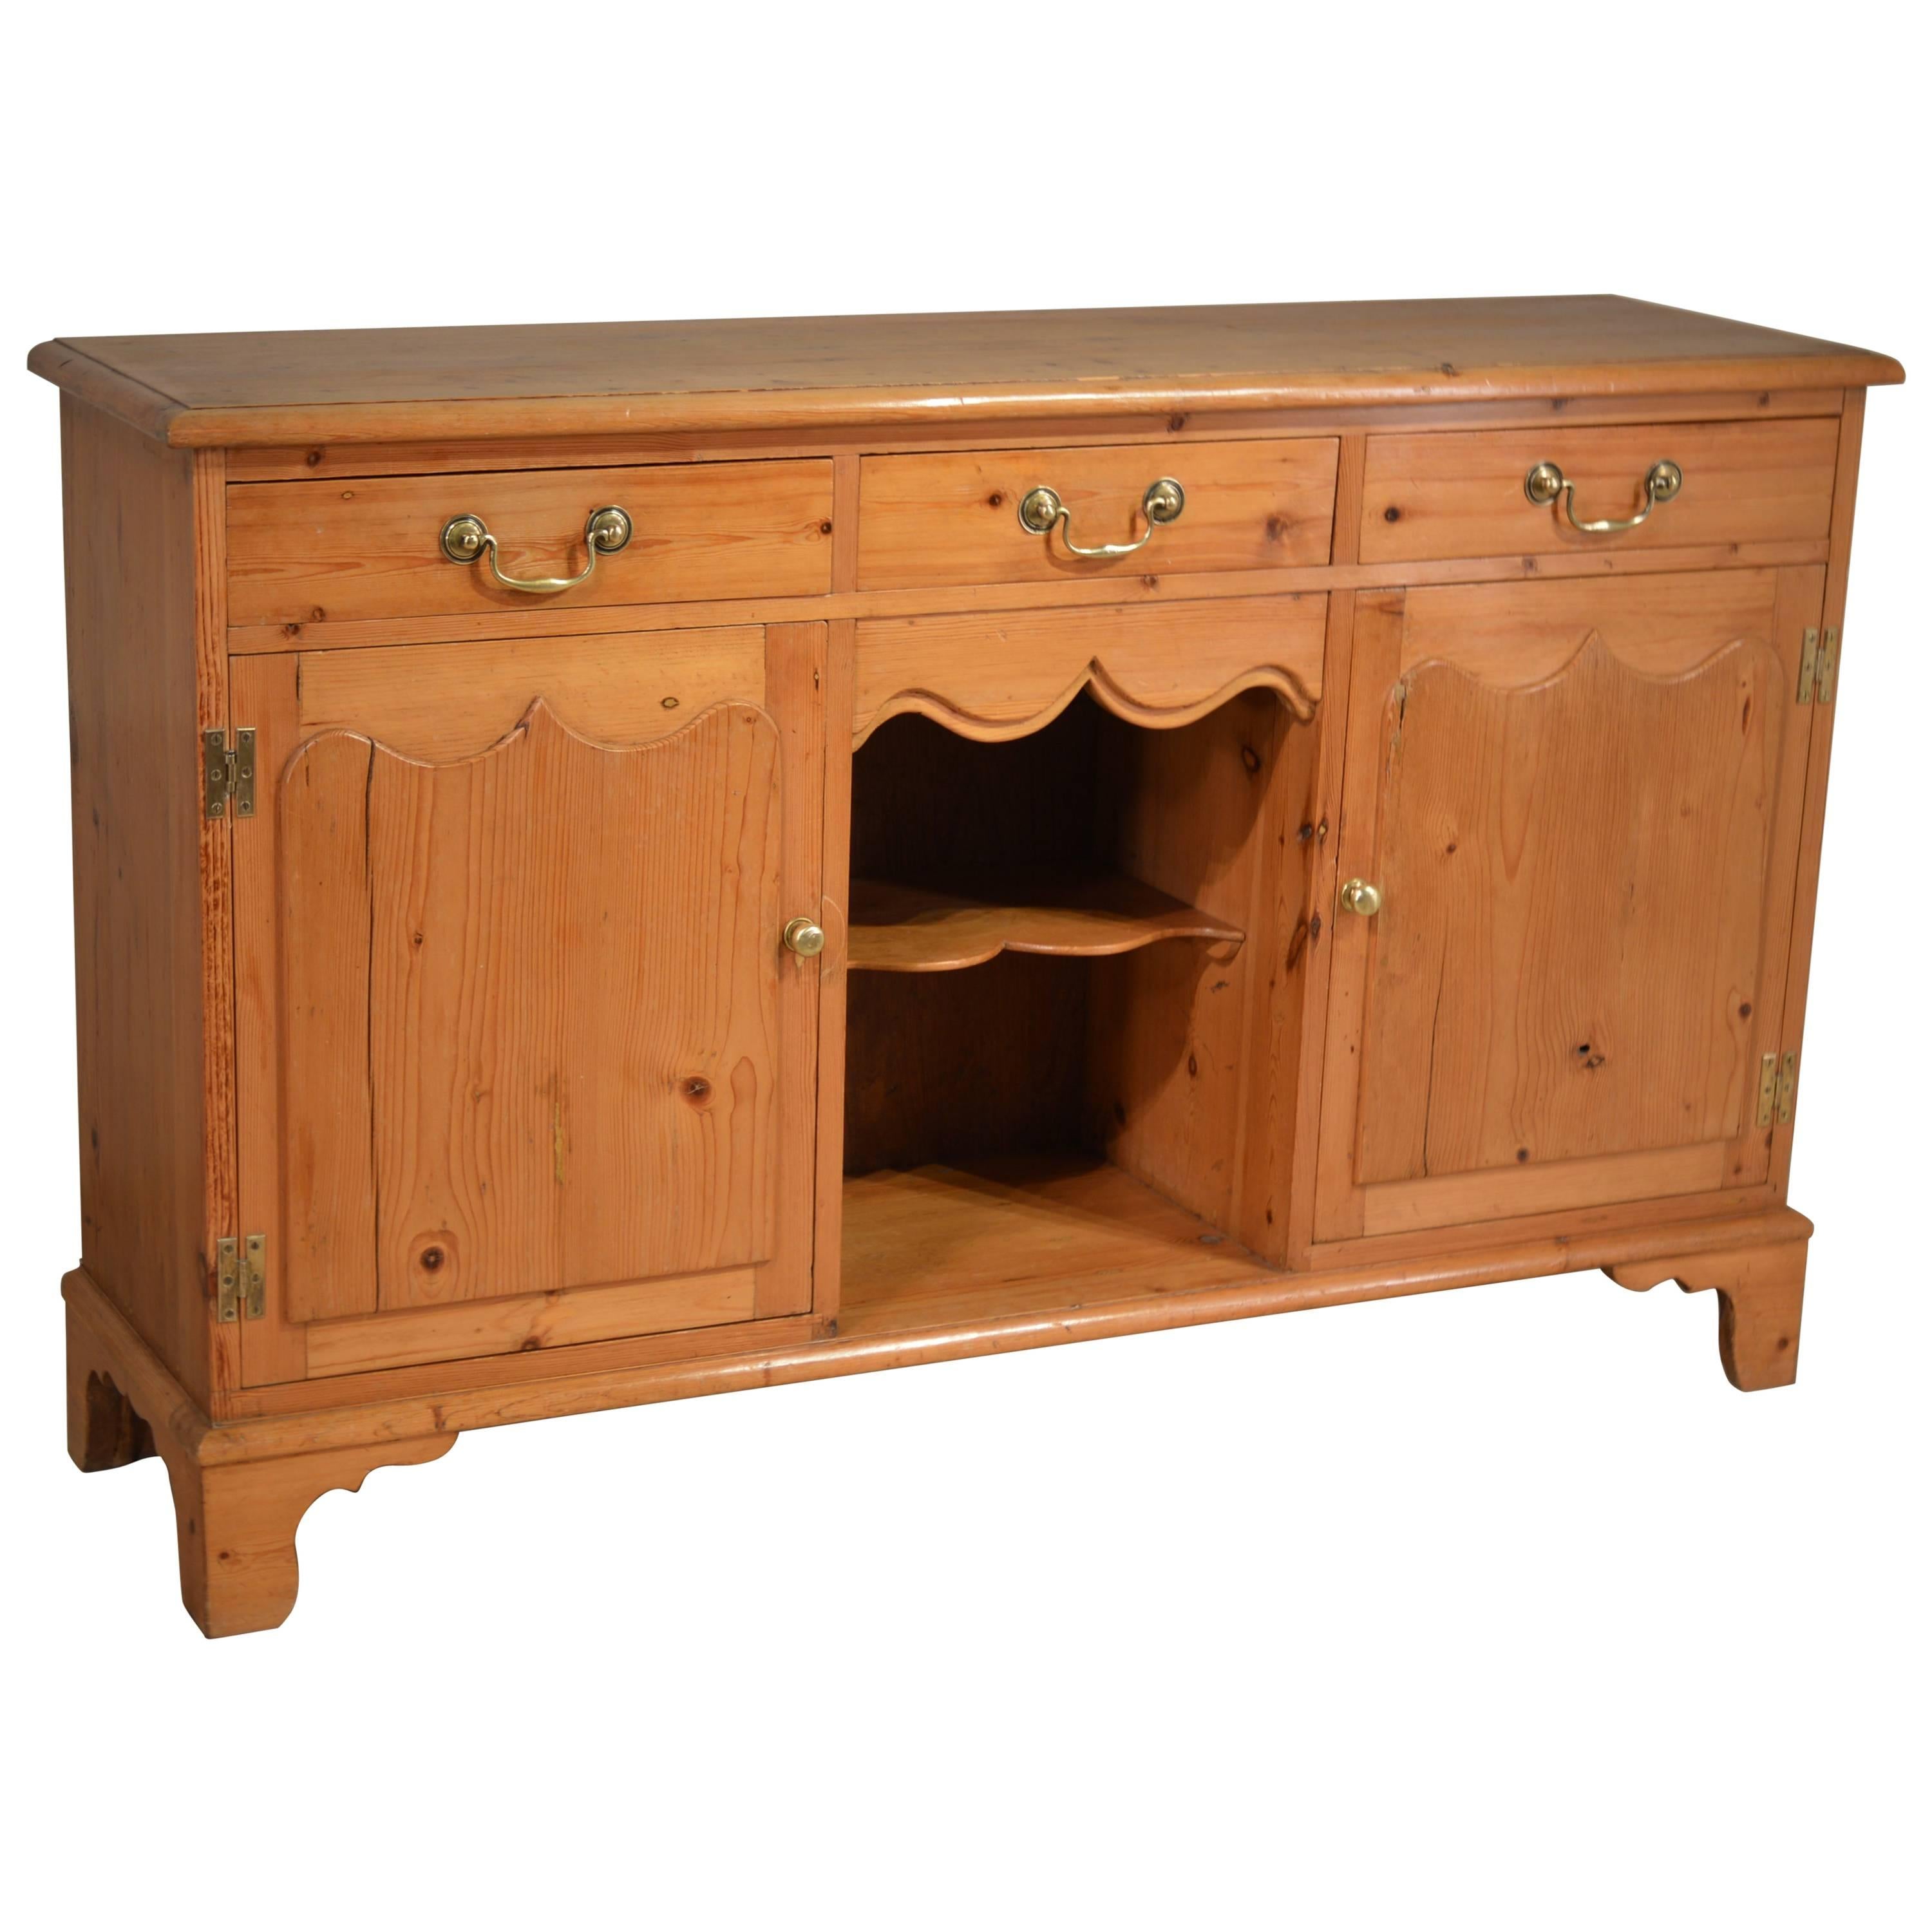 19th Century English Pine Dresser